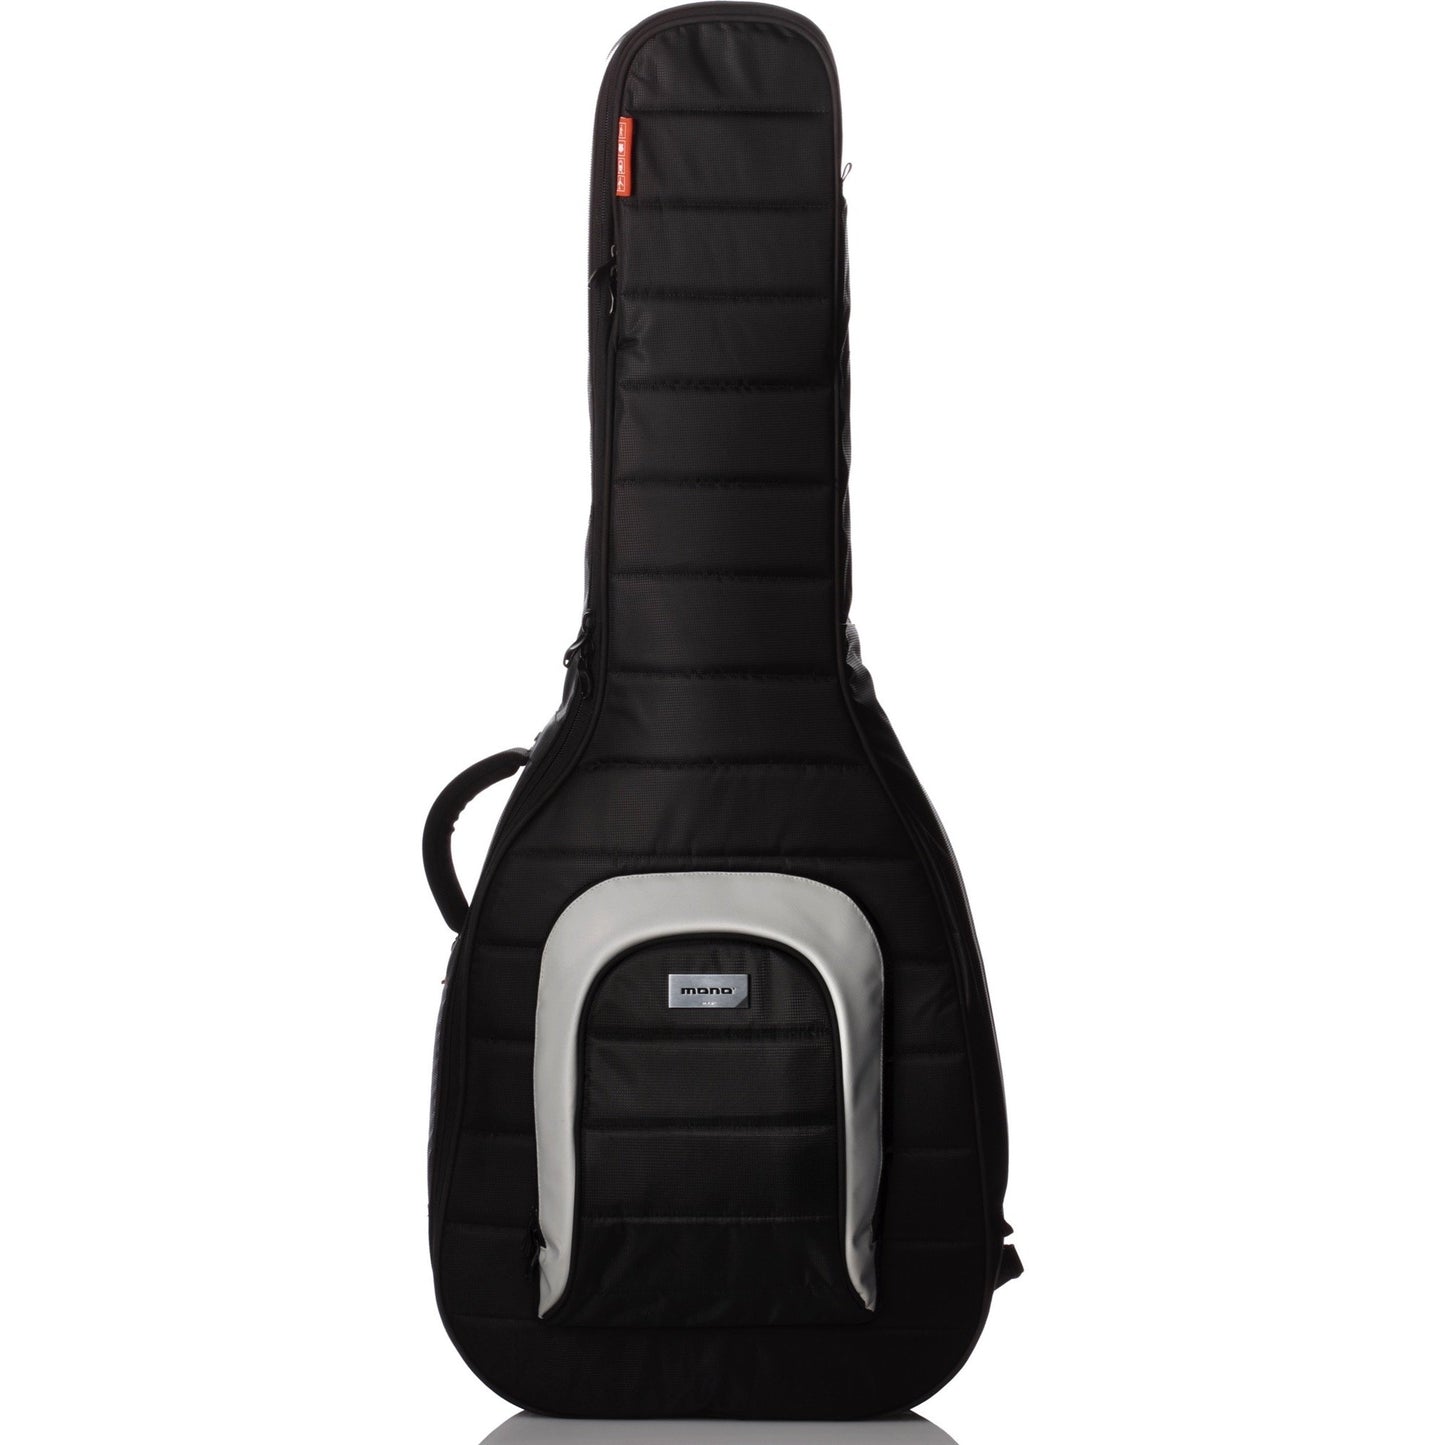 Mono M80 OM/Classical Guitar Case, Black